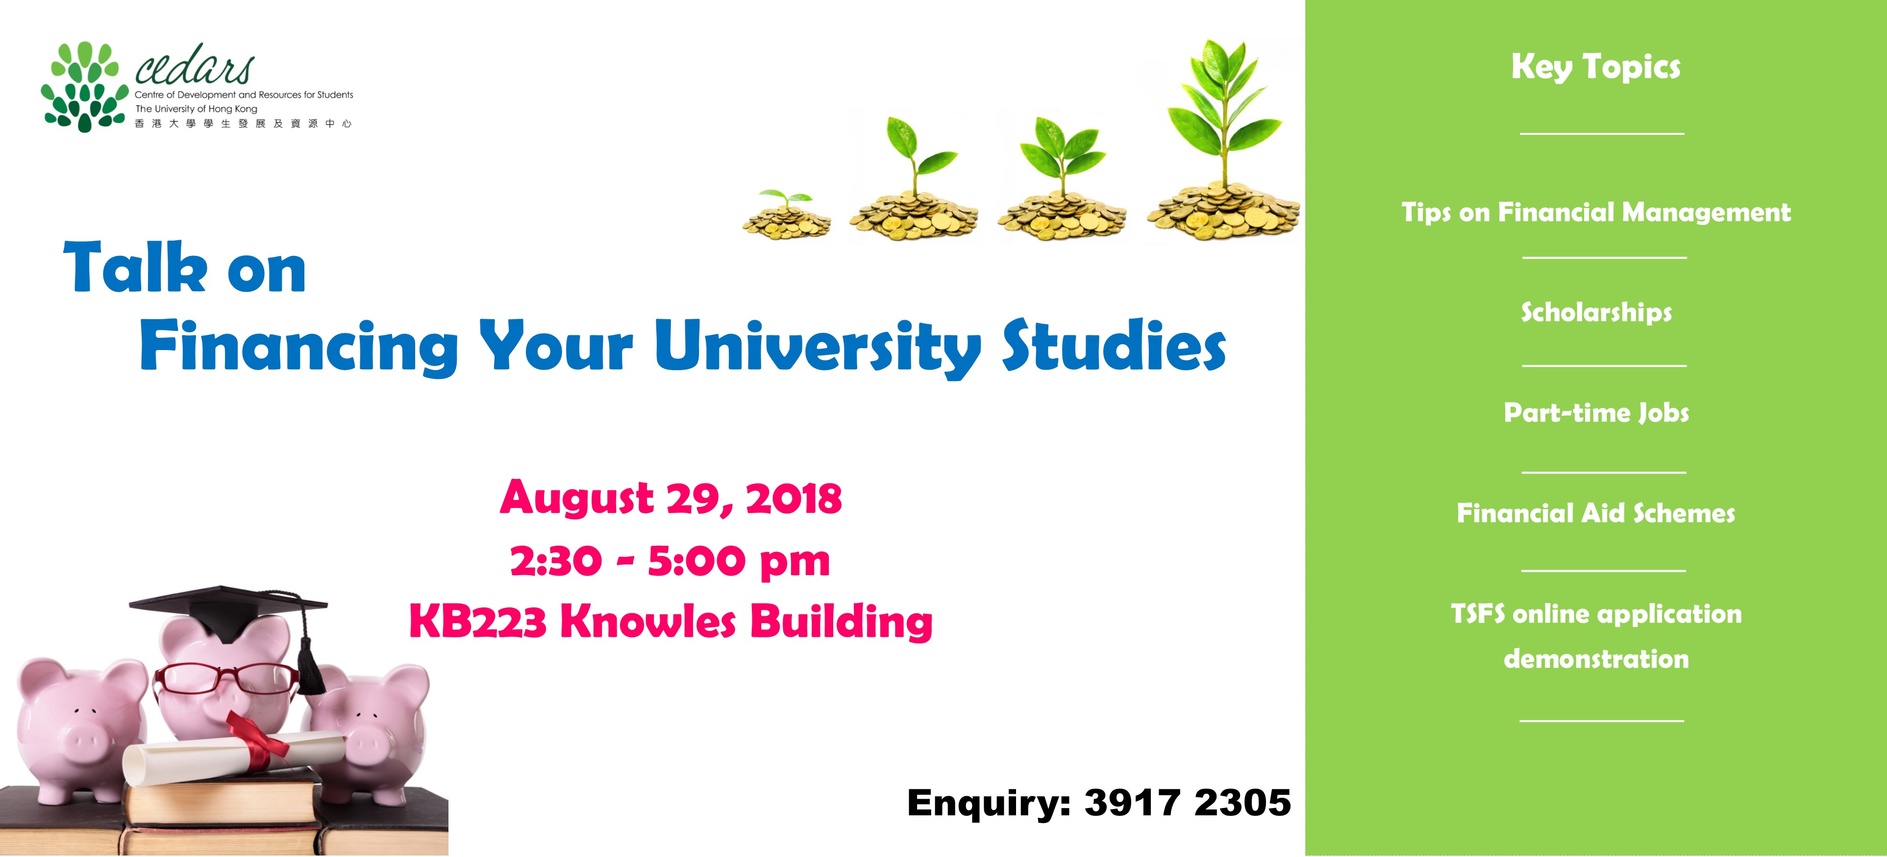 Talk on Financing Your University Studies